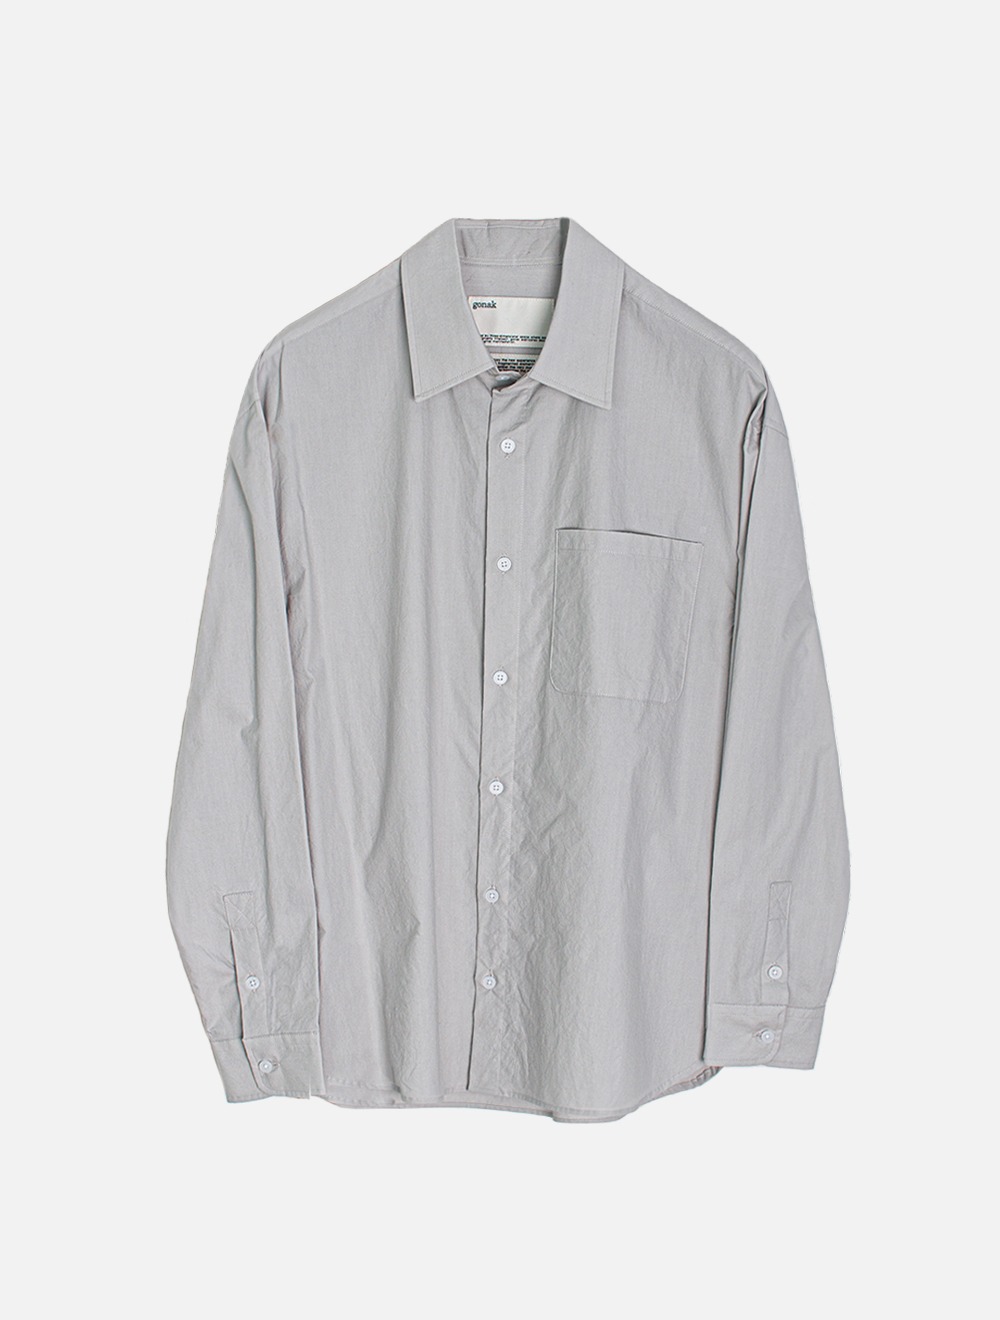 sage cotton shirt (grey)